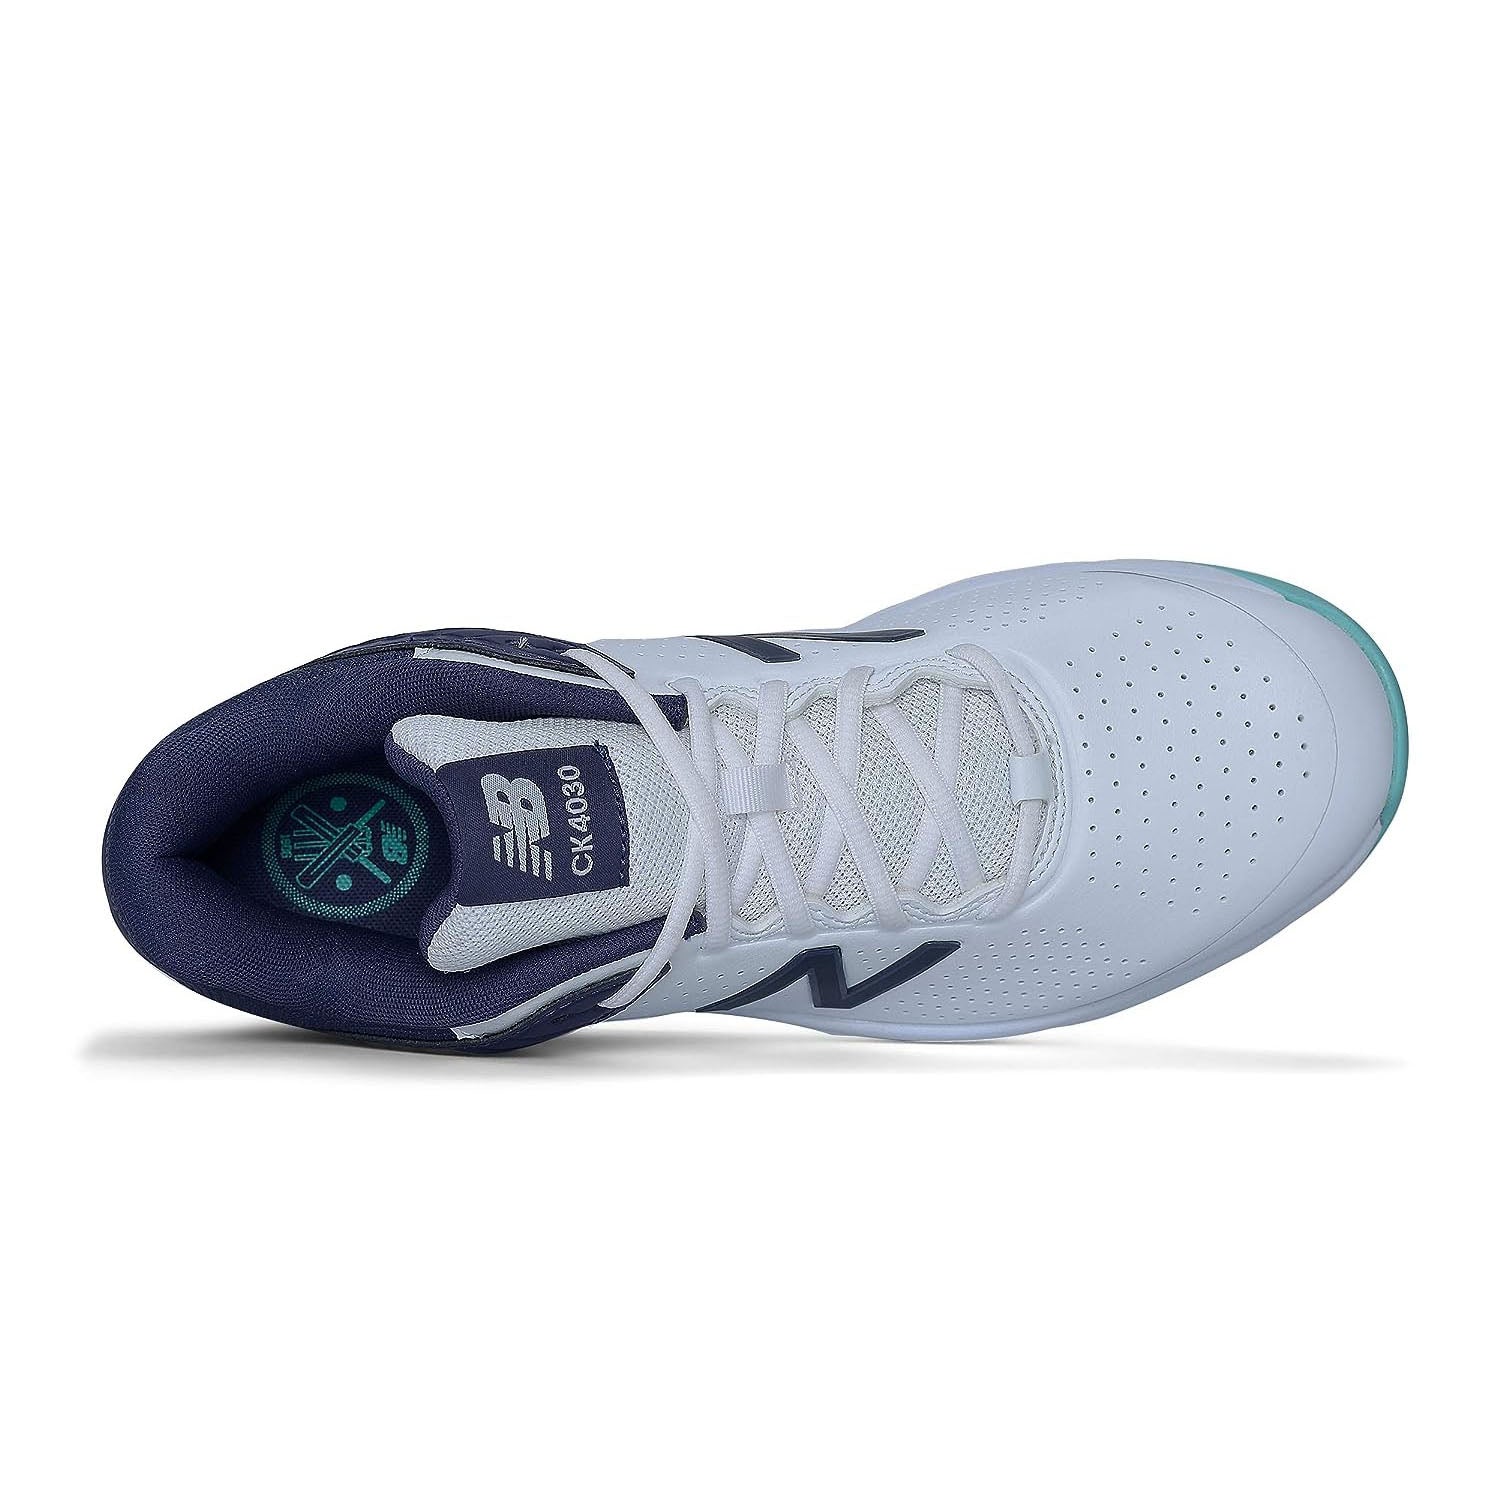 New Balance CK4030J4 Metal Spike Cricket Shoes, White/Cyber Jade - Best Price online Prokicksports.com